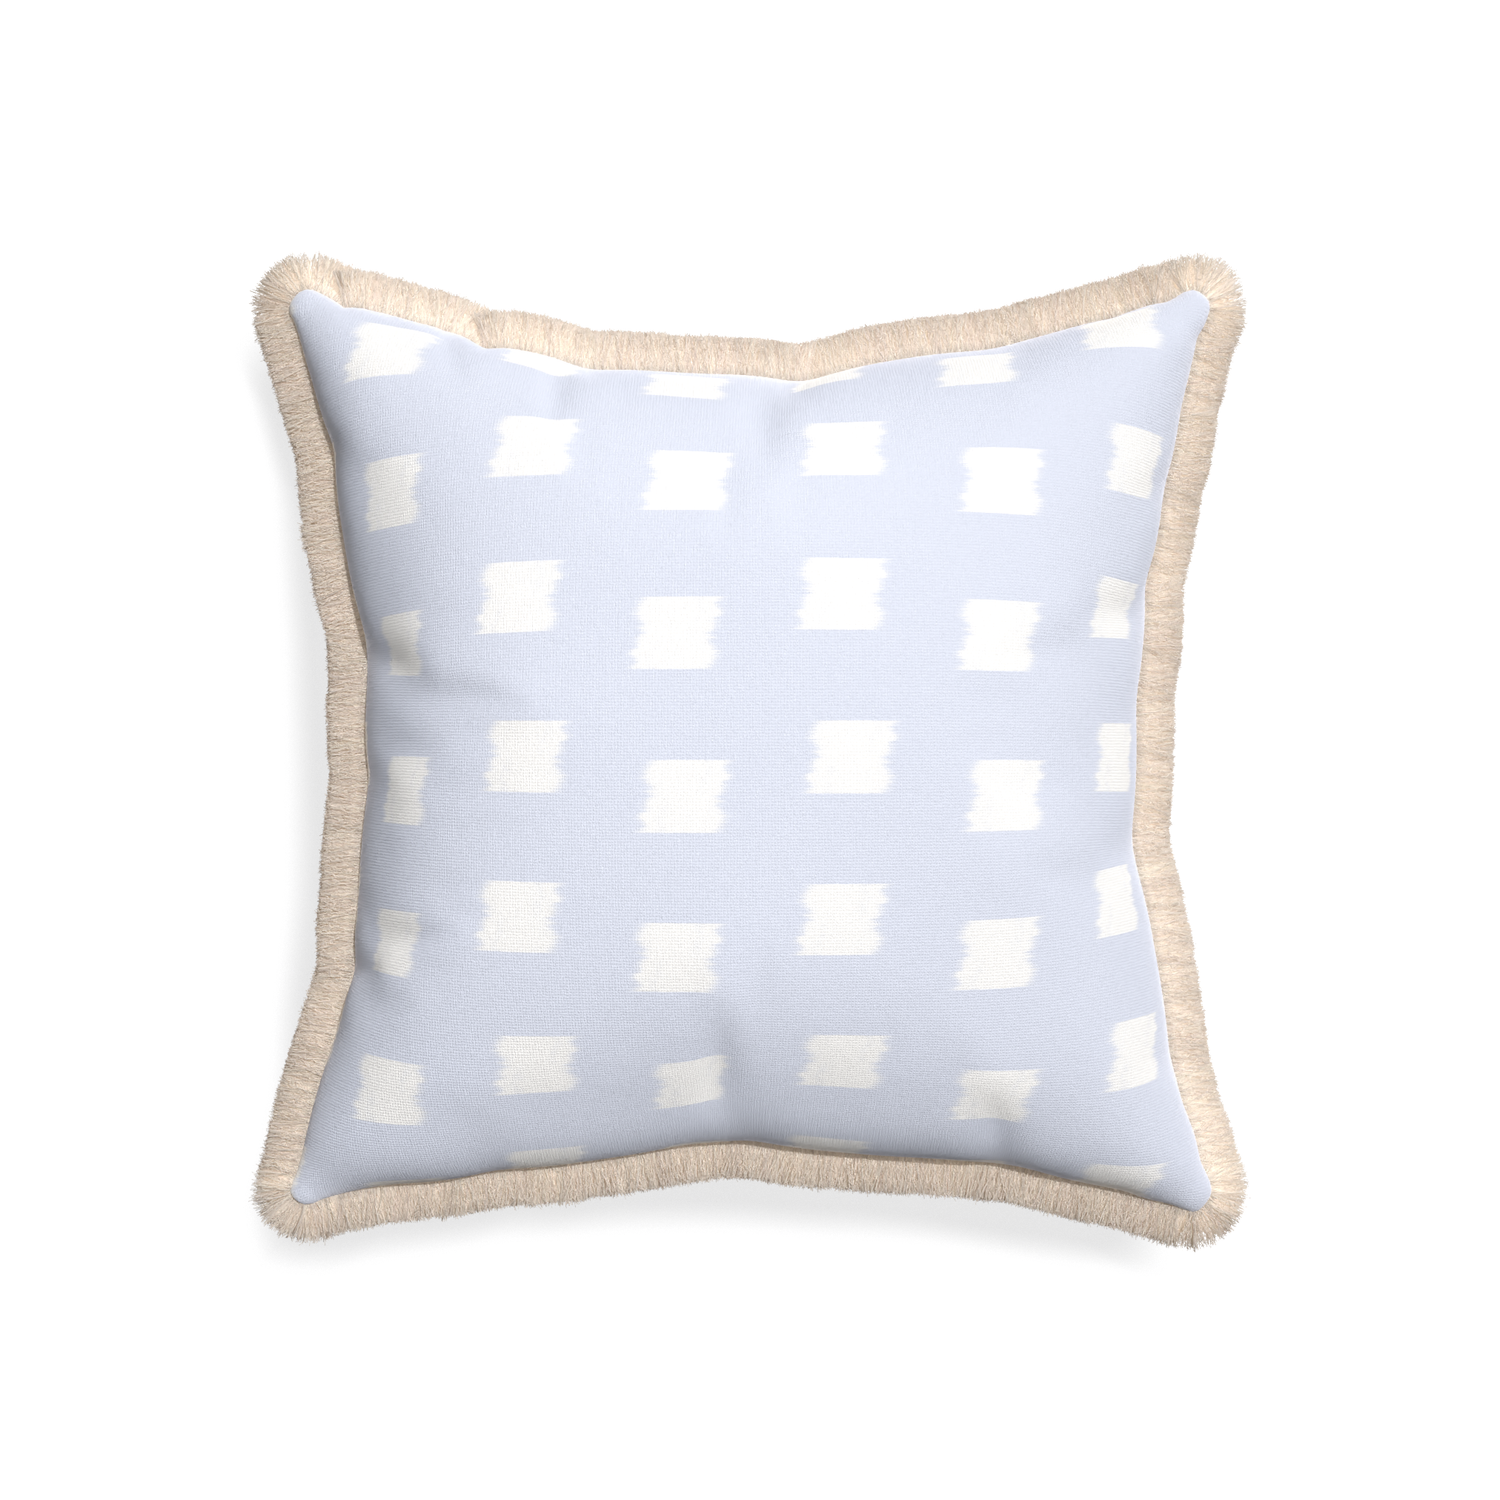 20-square denton custom sky blue patternpillow with cream fringe on white background